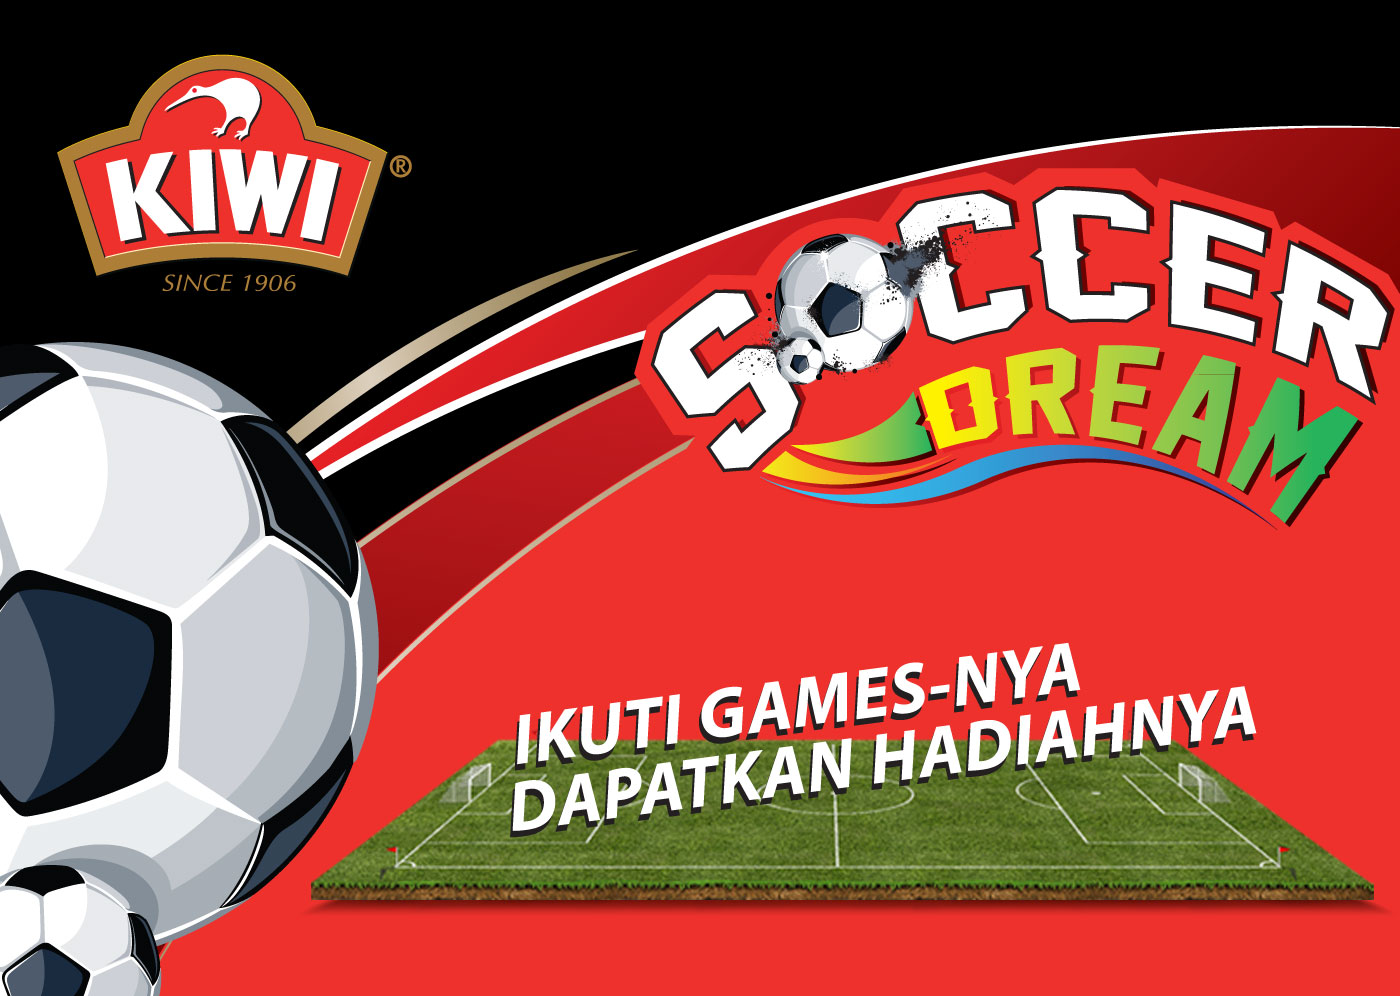 Kiwi soccer dream